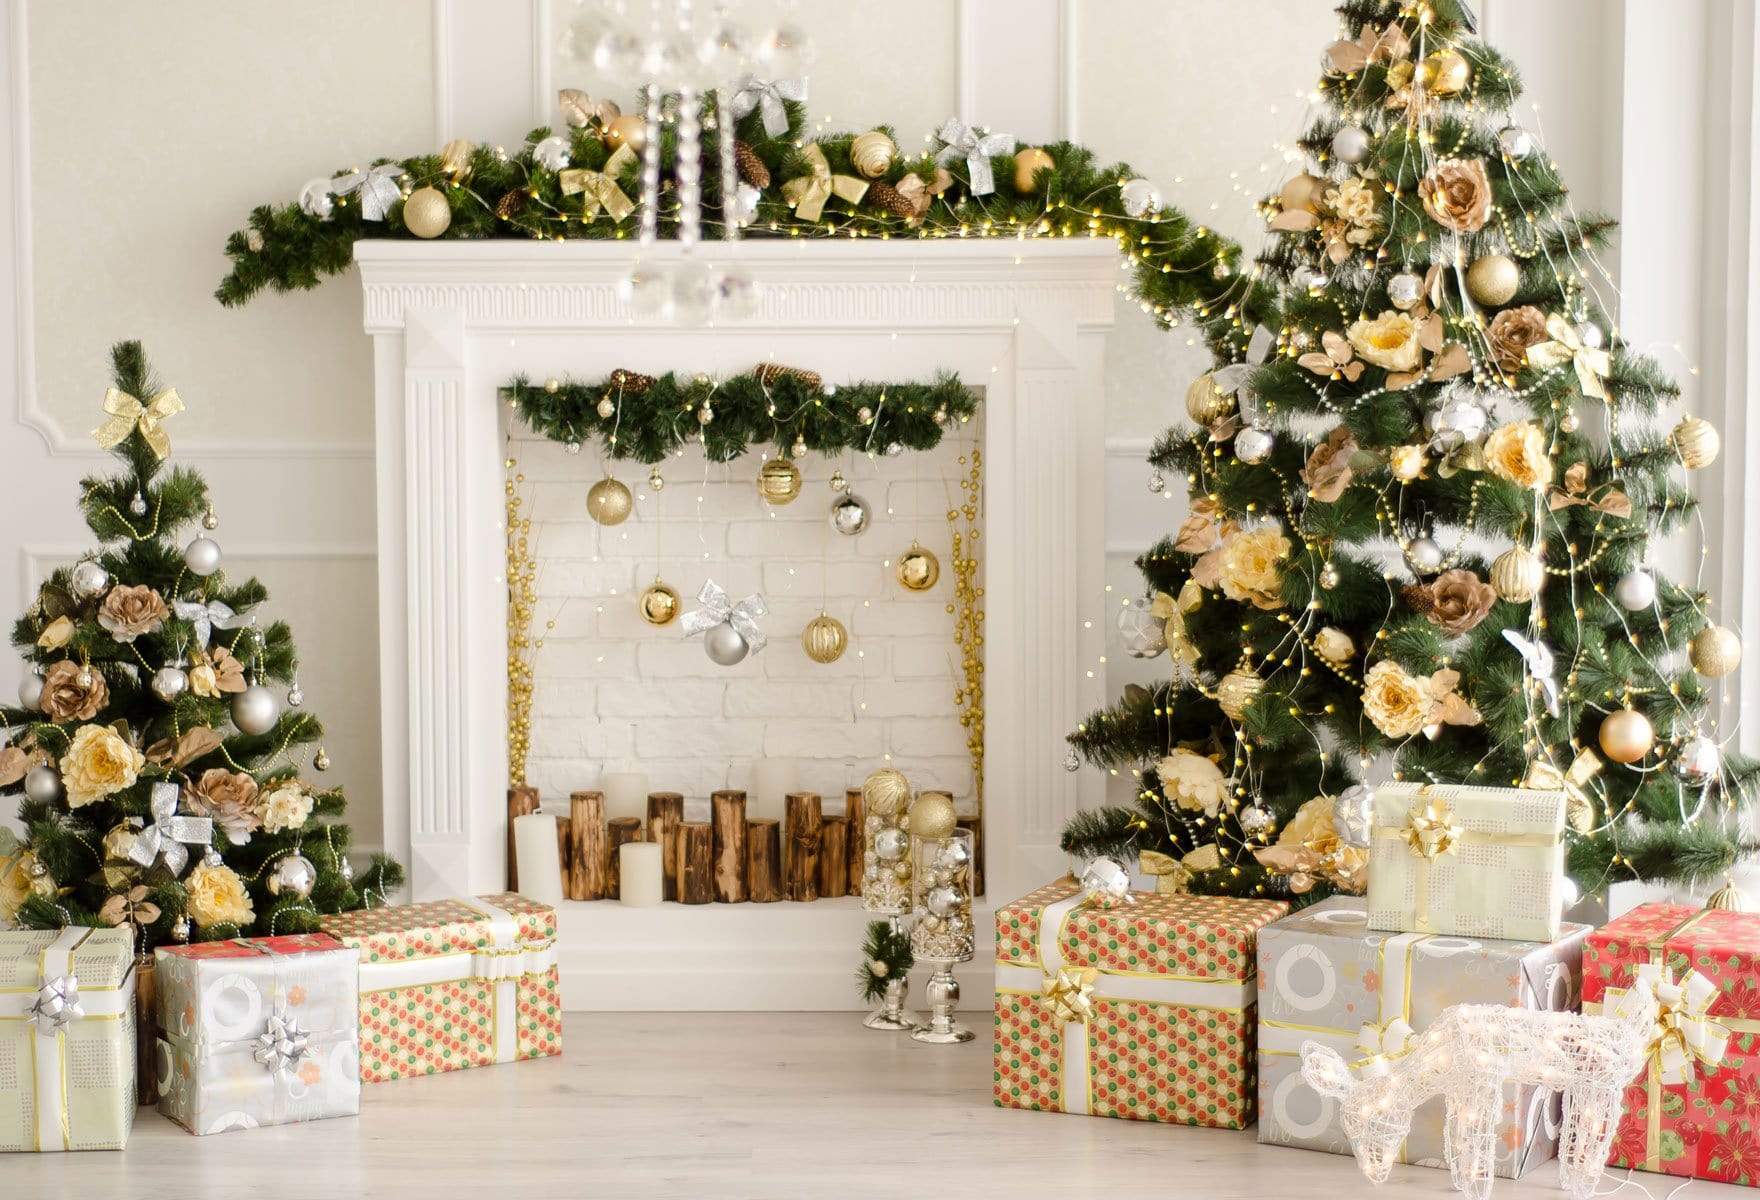 Kate Christmas Decorations Presents Fireplace Backdrop